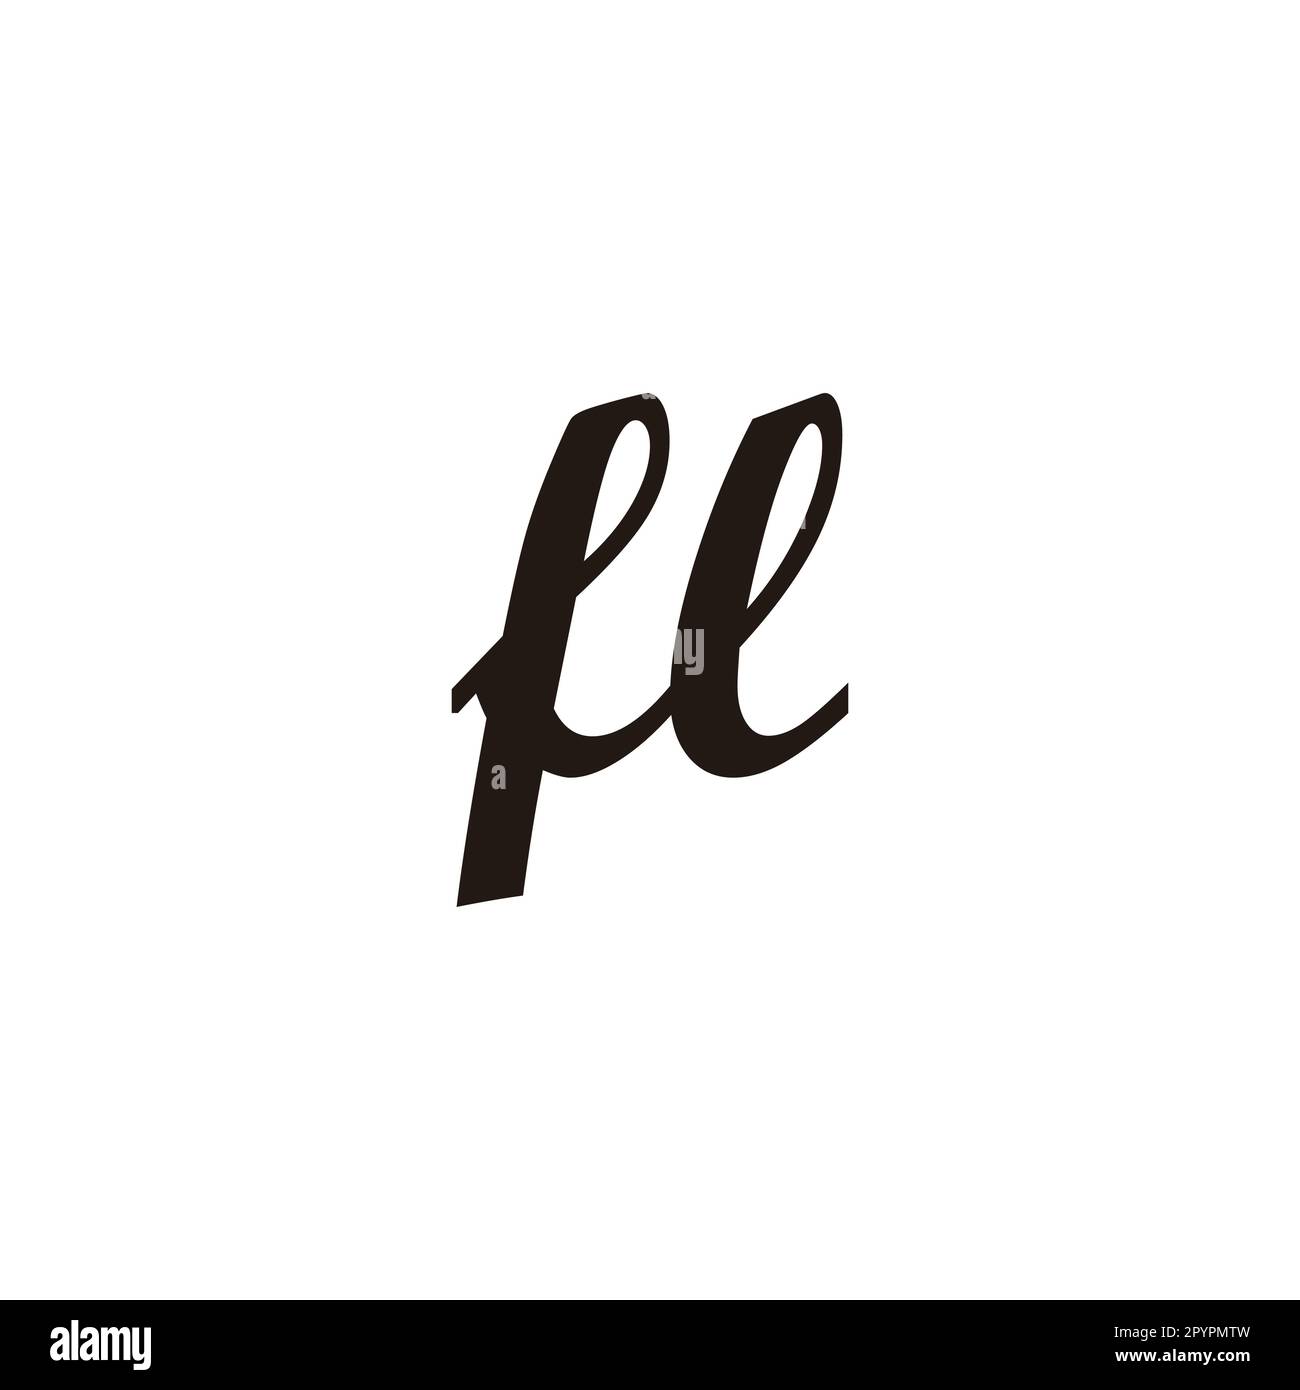 Letter fL connect geometric symbol simple logo vector Stock Vector